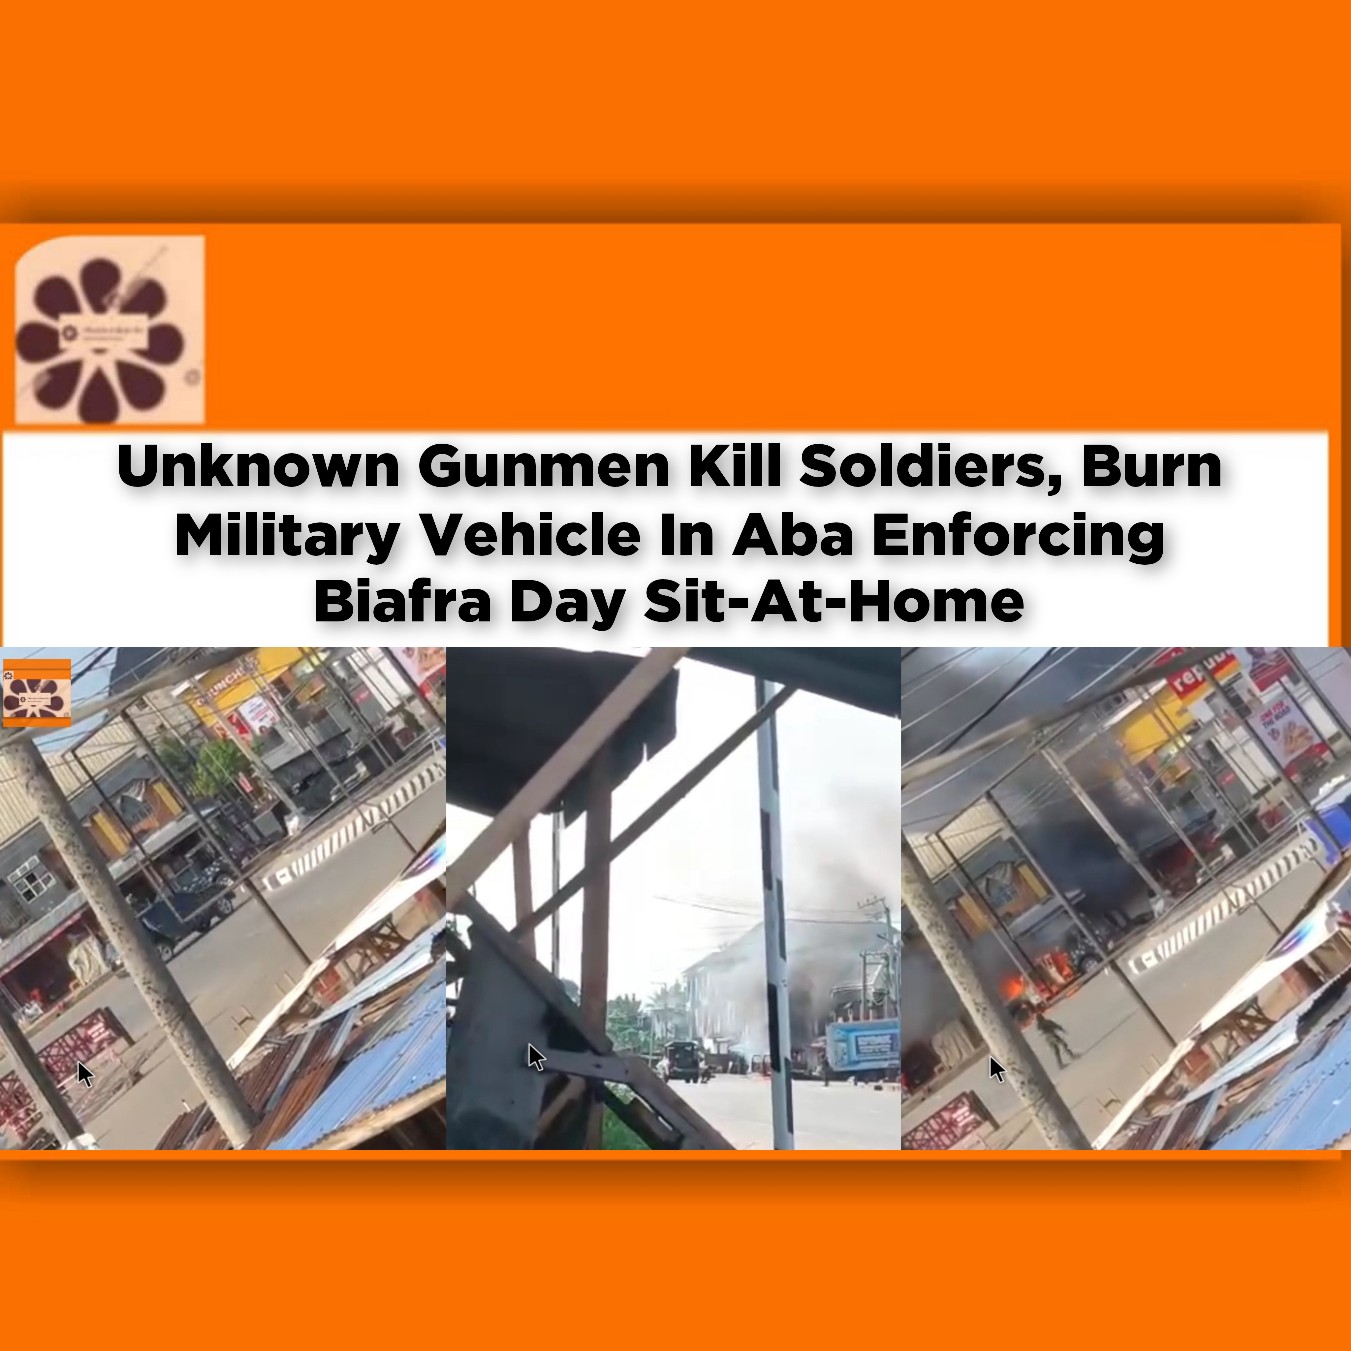 Unknown Gunmen Kill Soldiers, Burn Military Vehicle In Aba Enforcing Biafra Day Sit-At-Home ~ OsazuwaAkonedo #Aba #Abia #Anambra #Biafra #Enugu #Gunmen #ipob #Obikabia #SitAtHome #UNIZIK #Unknown #WAEC